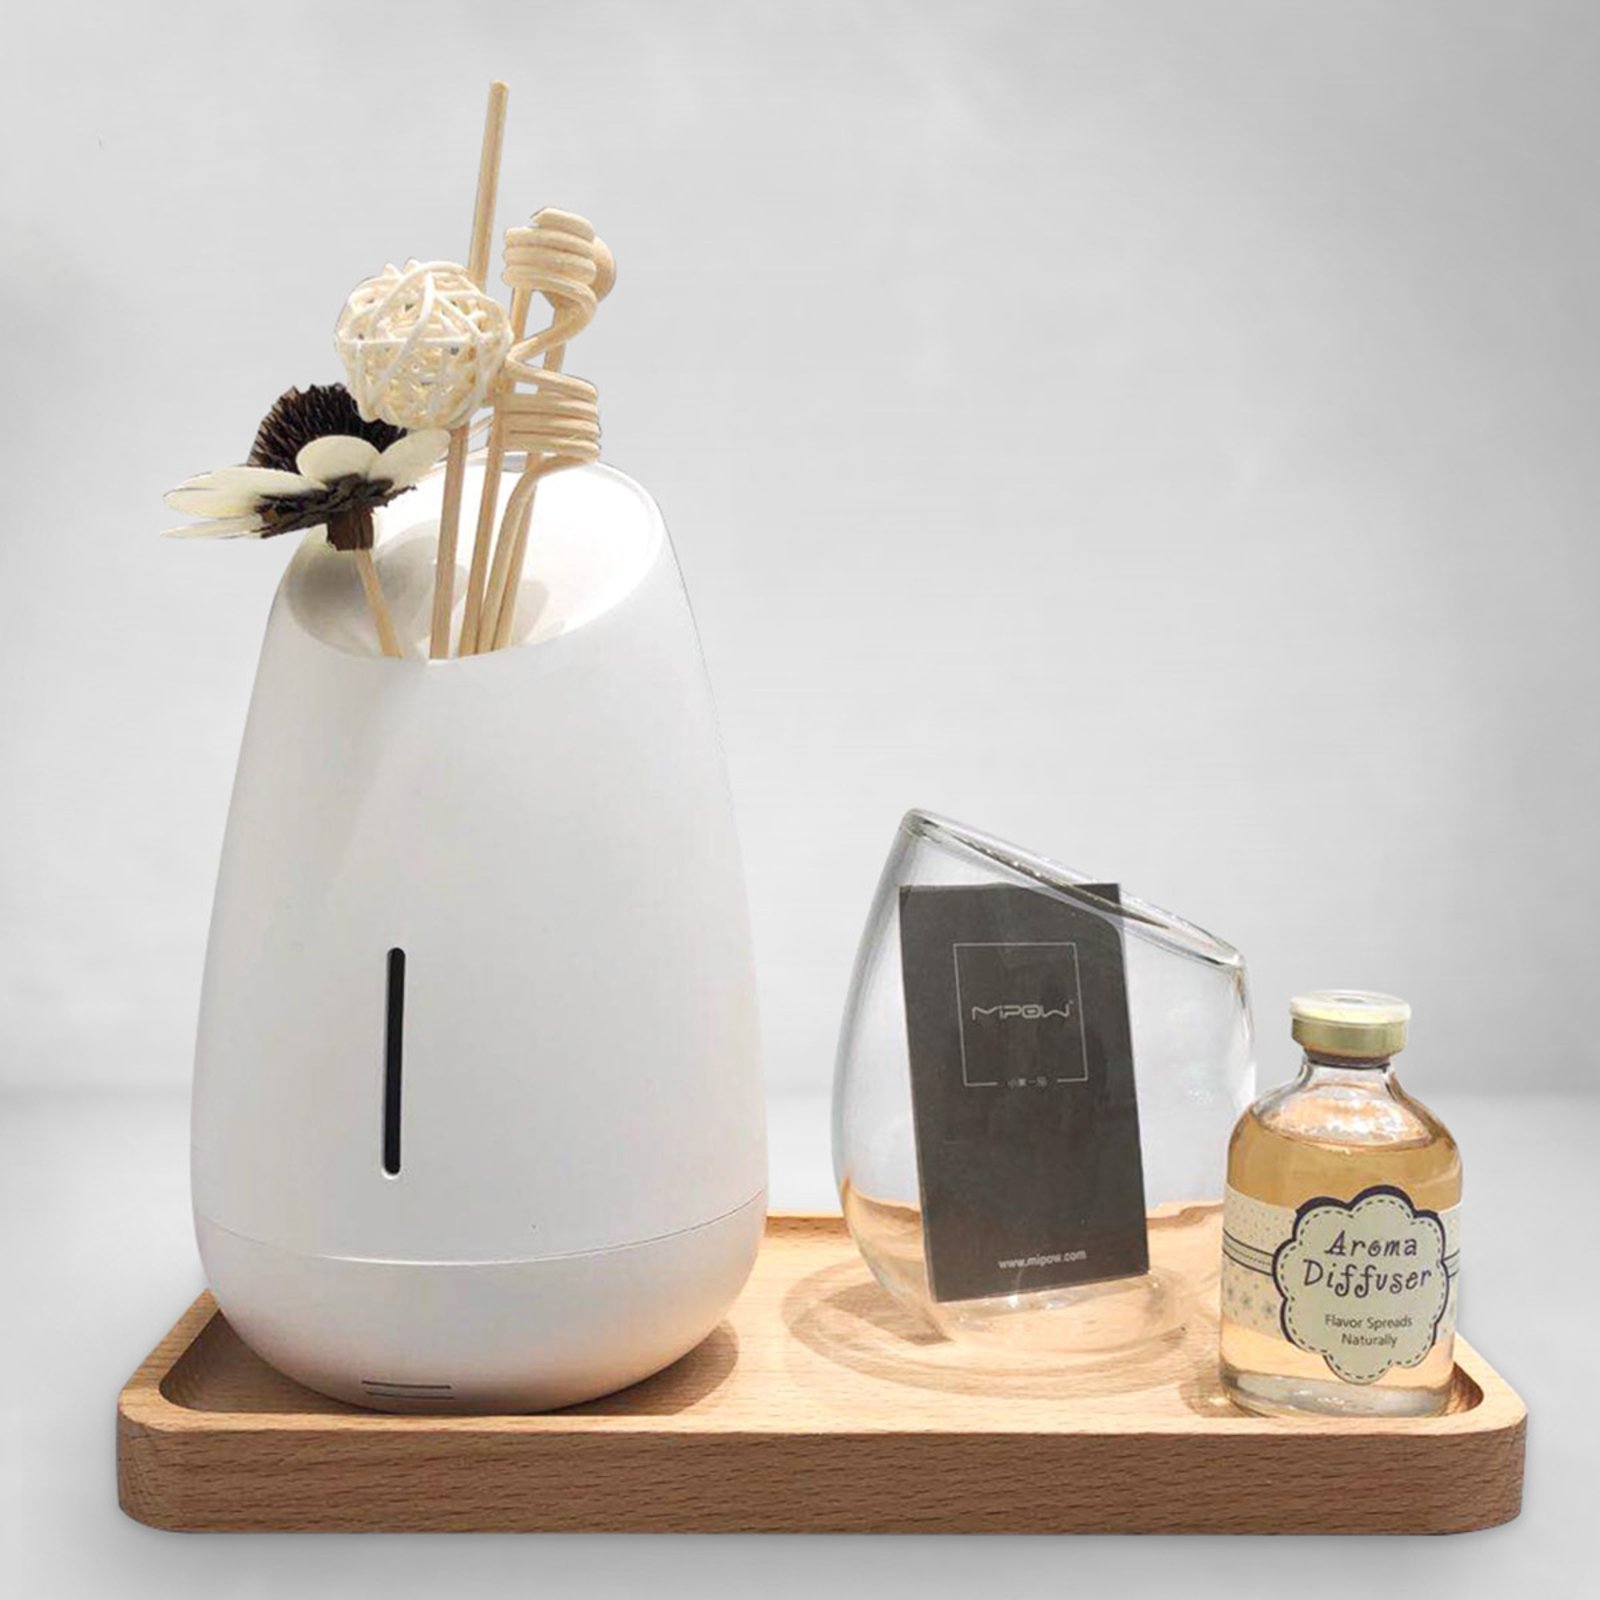 MiPow Vaso aroma diffuser with music, white